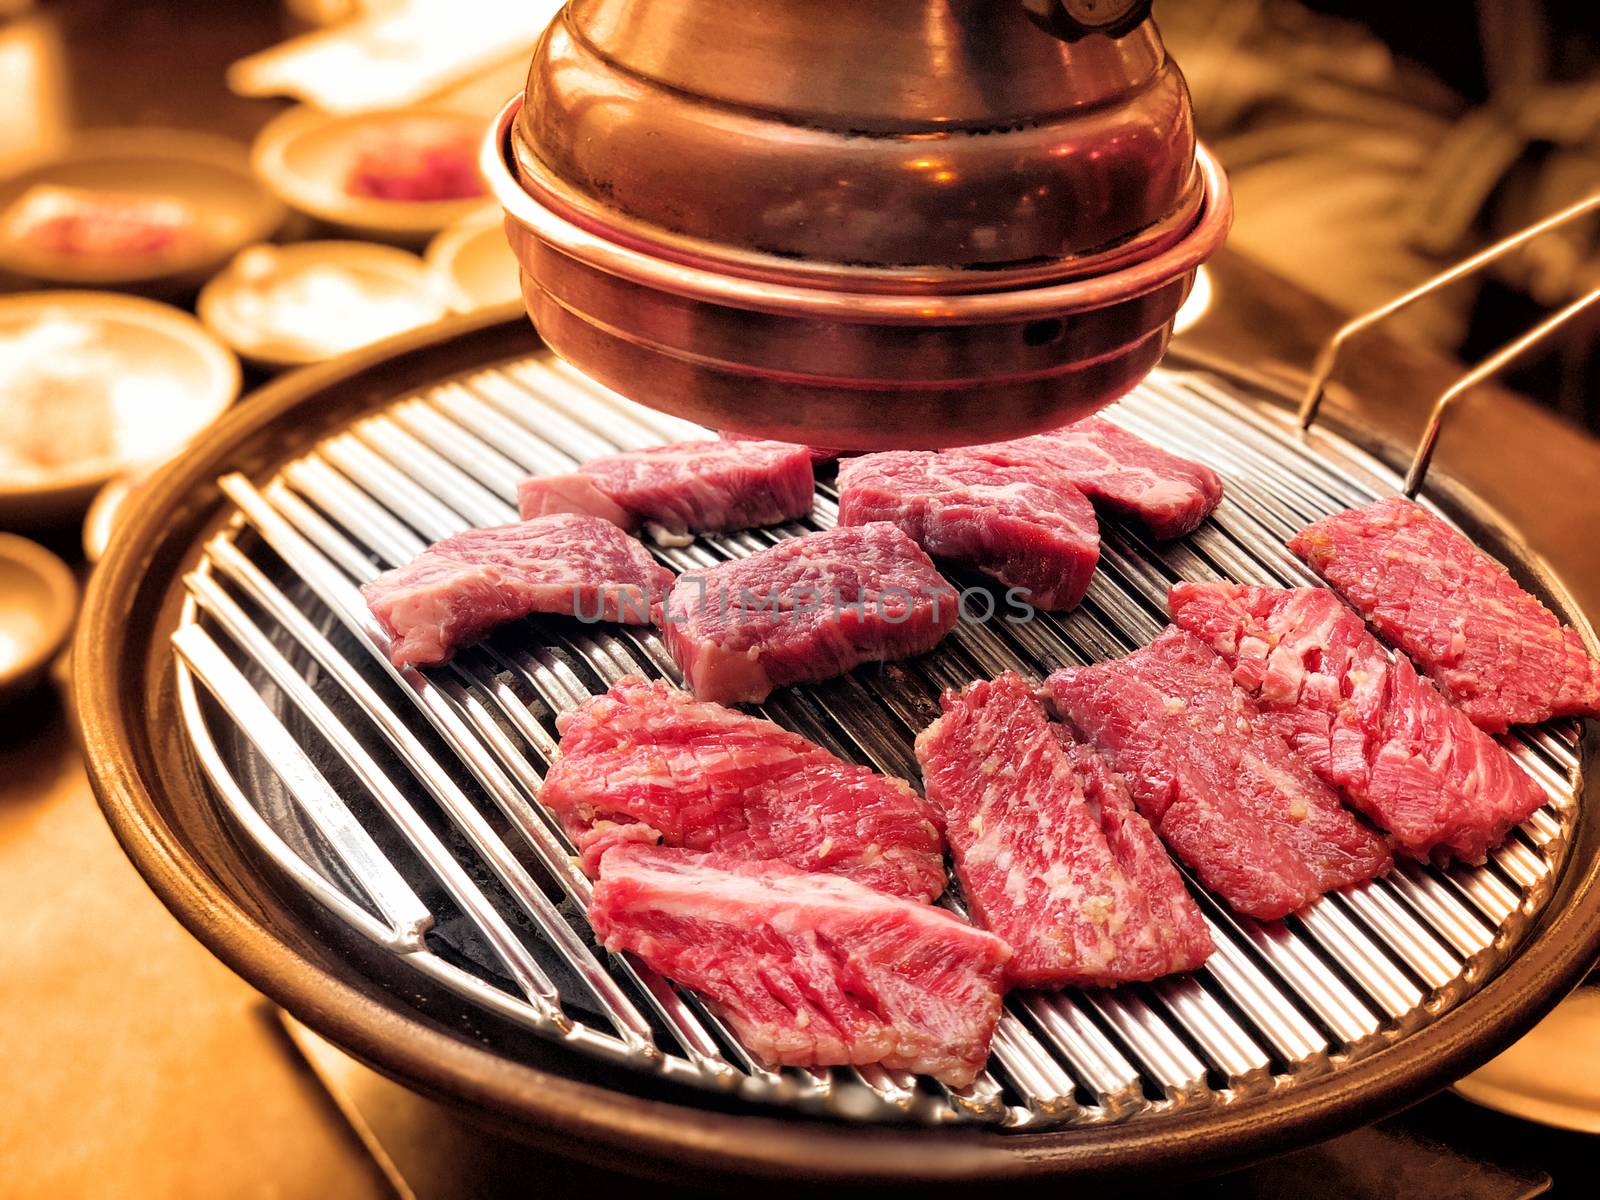 Korean beef barbecue, a popular korean cuisine of grilling meat